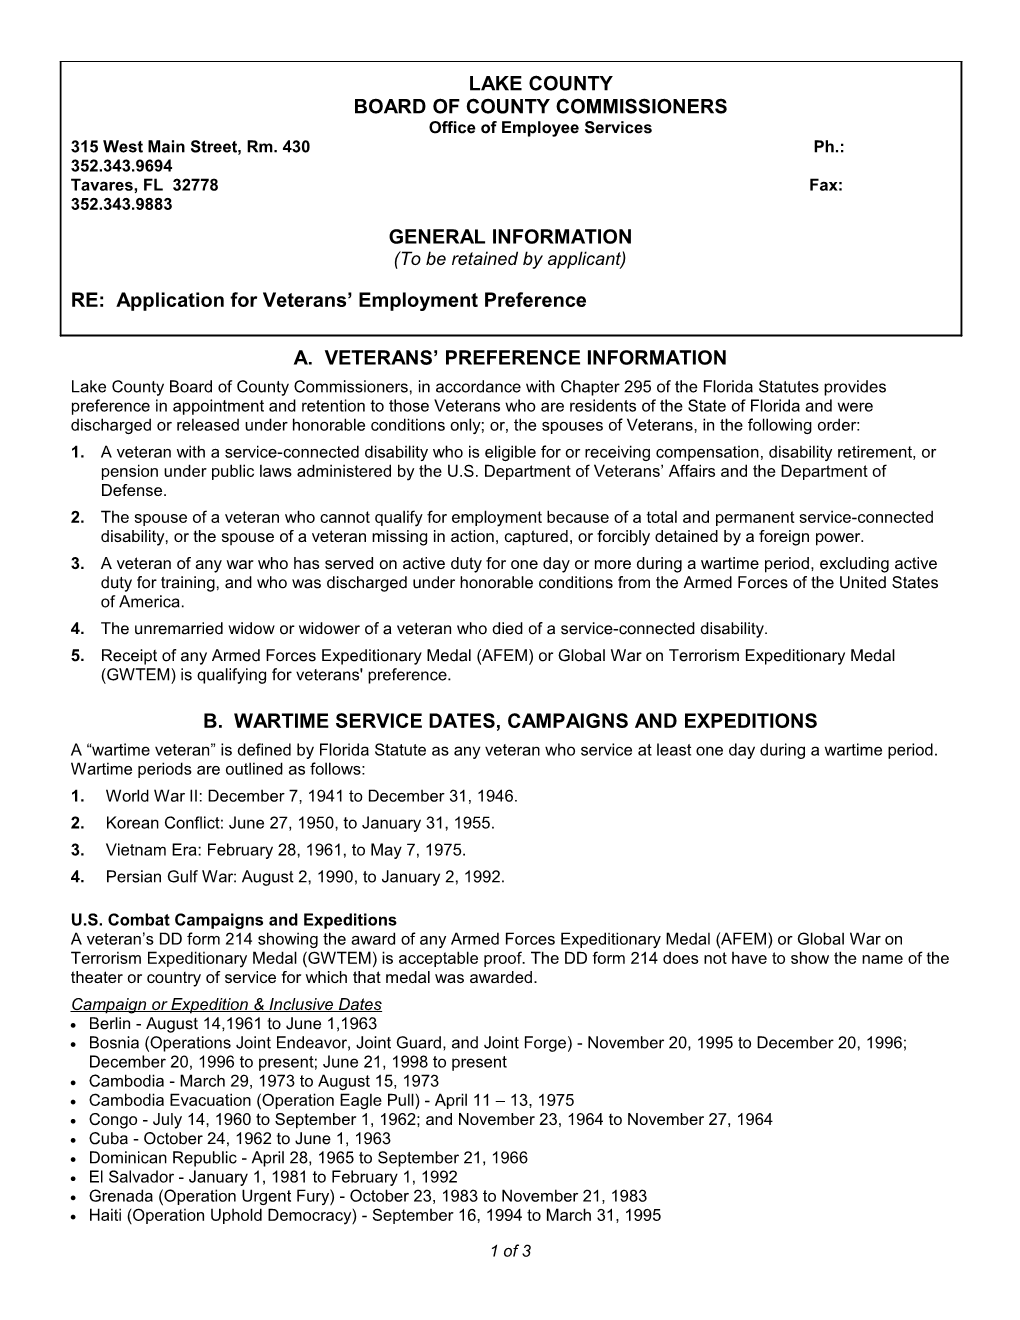 Veterans' Preference Information/Instructions